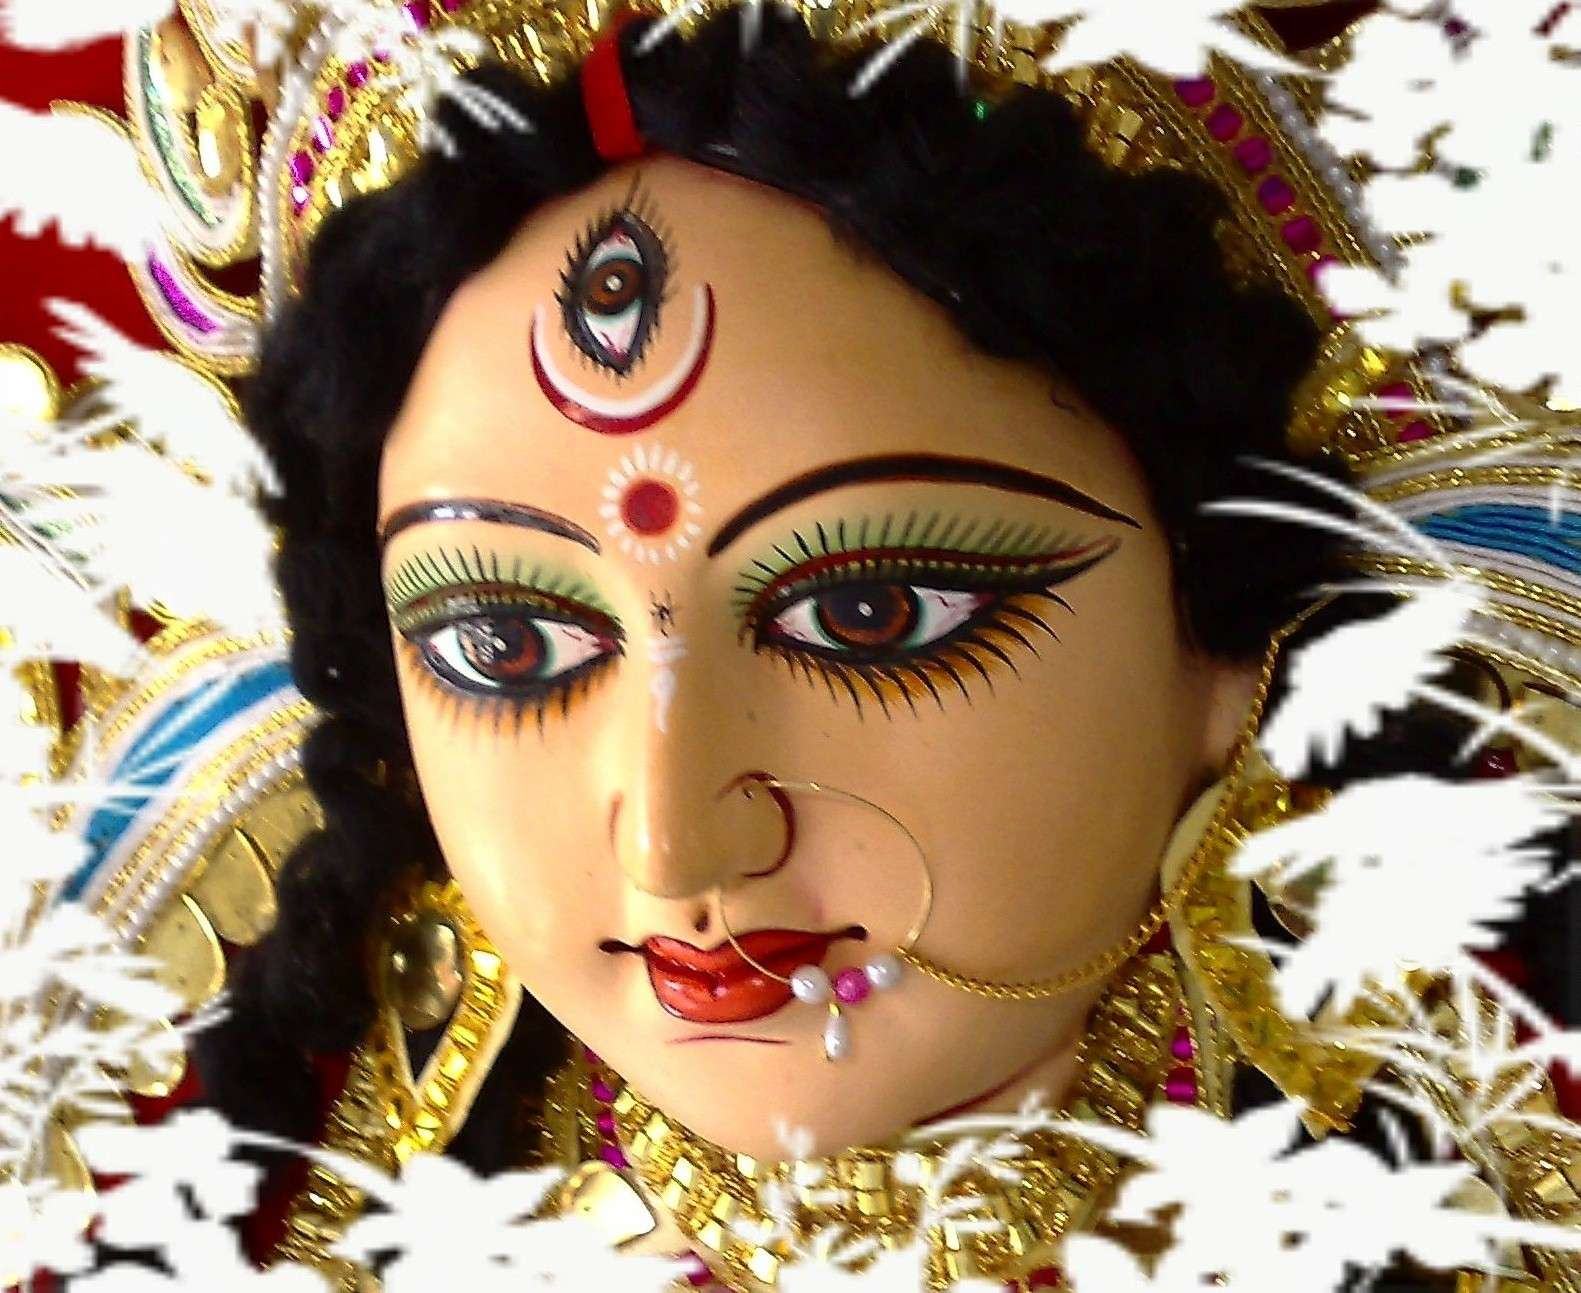 Desktop 3D Maa Durga Wallpapers - Wallpaper Cave